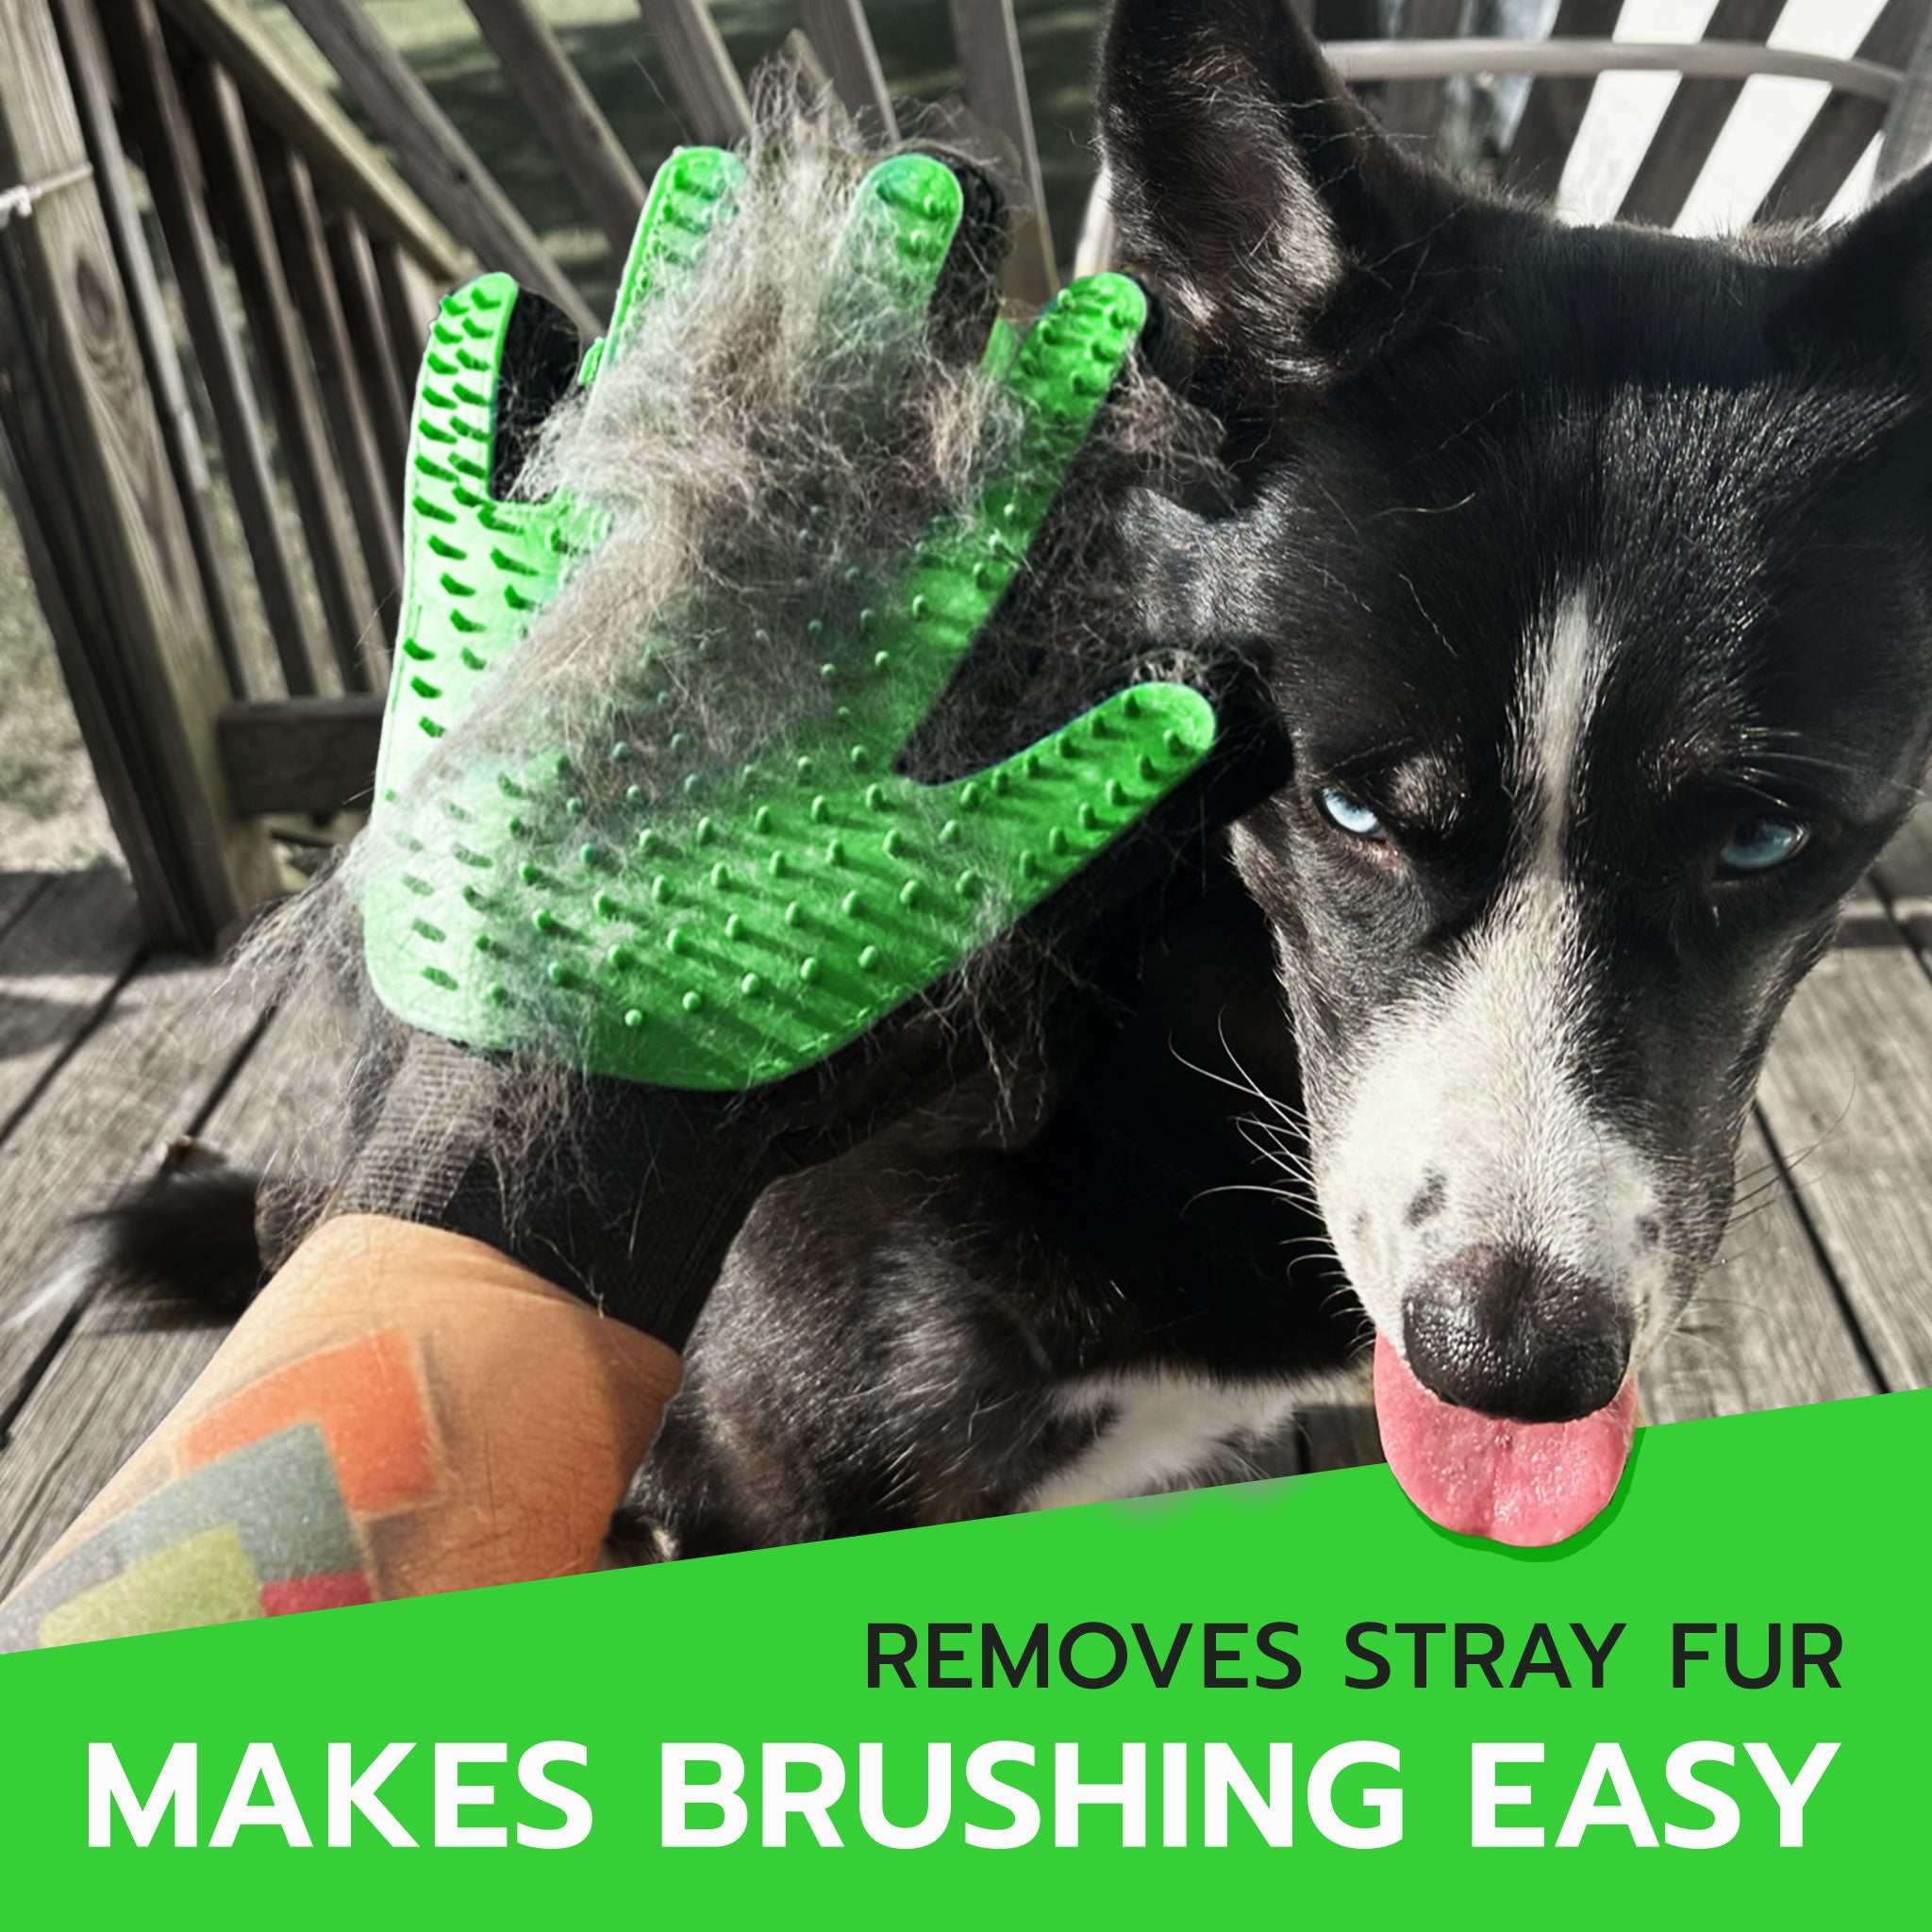 Pet hair brush glove - removing fur